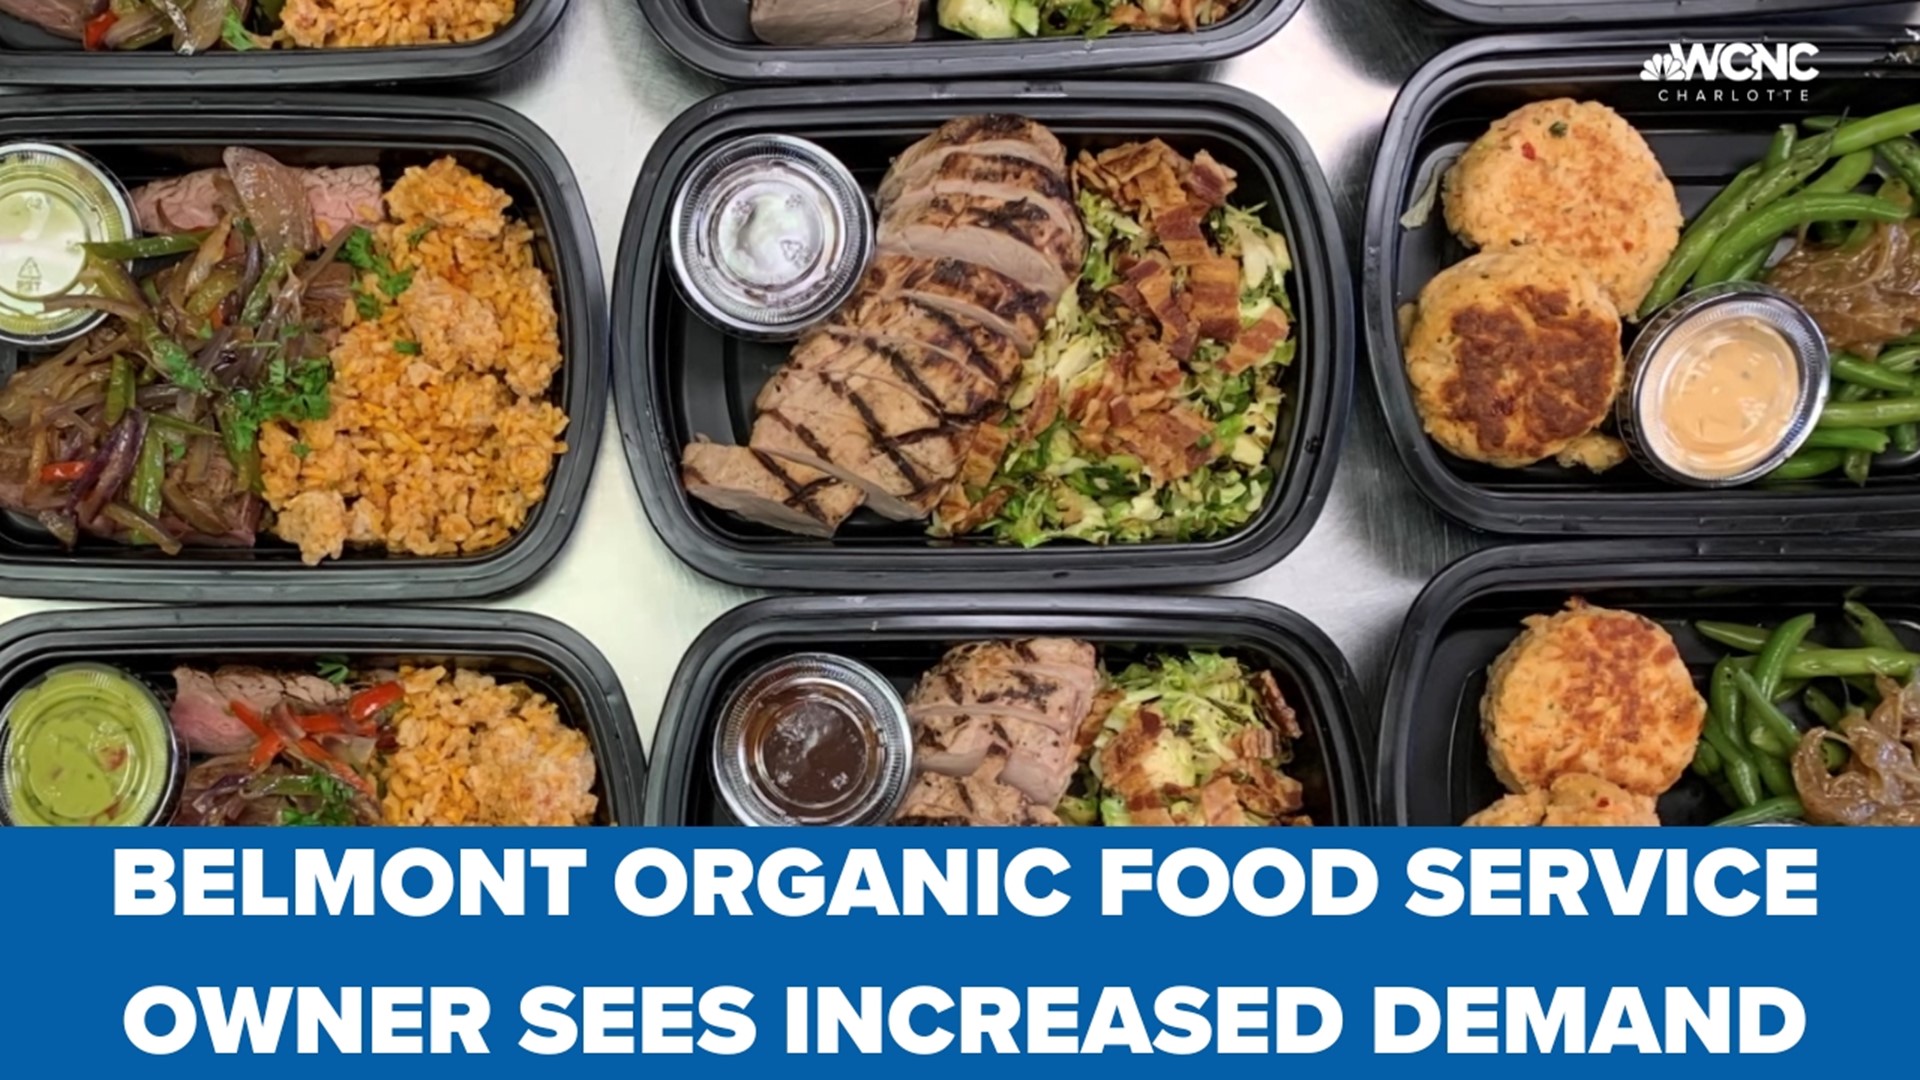 Belmont organic food truck sees increased demand